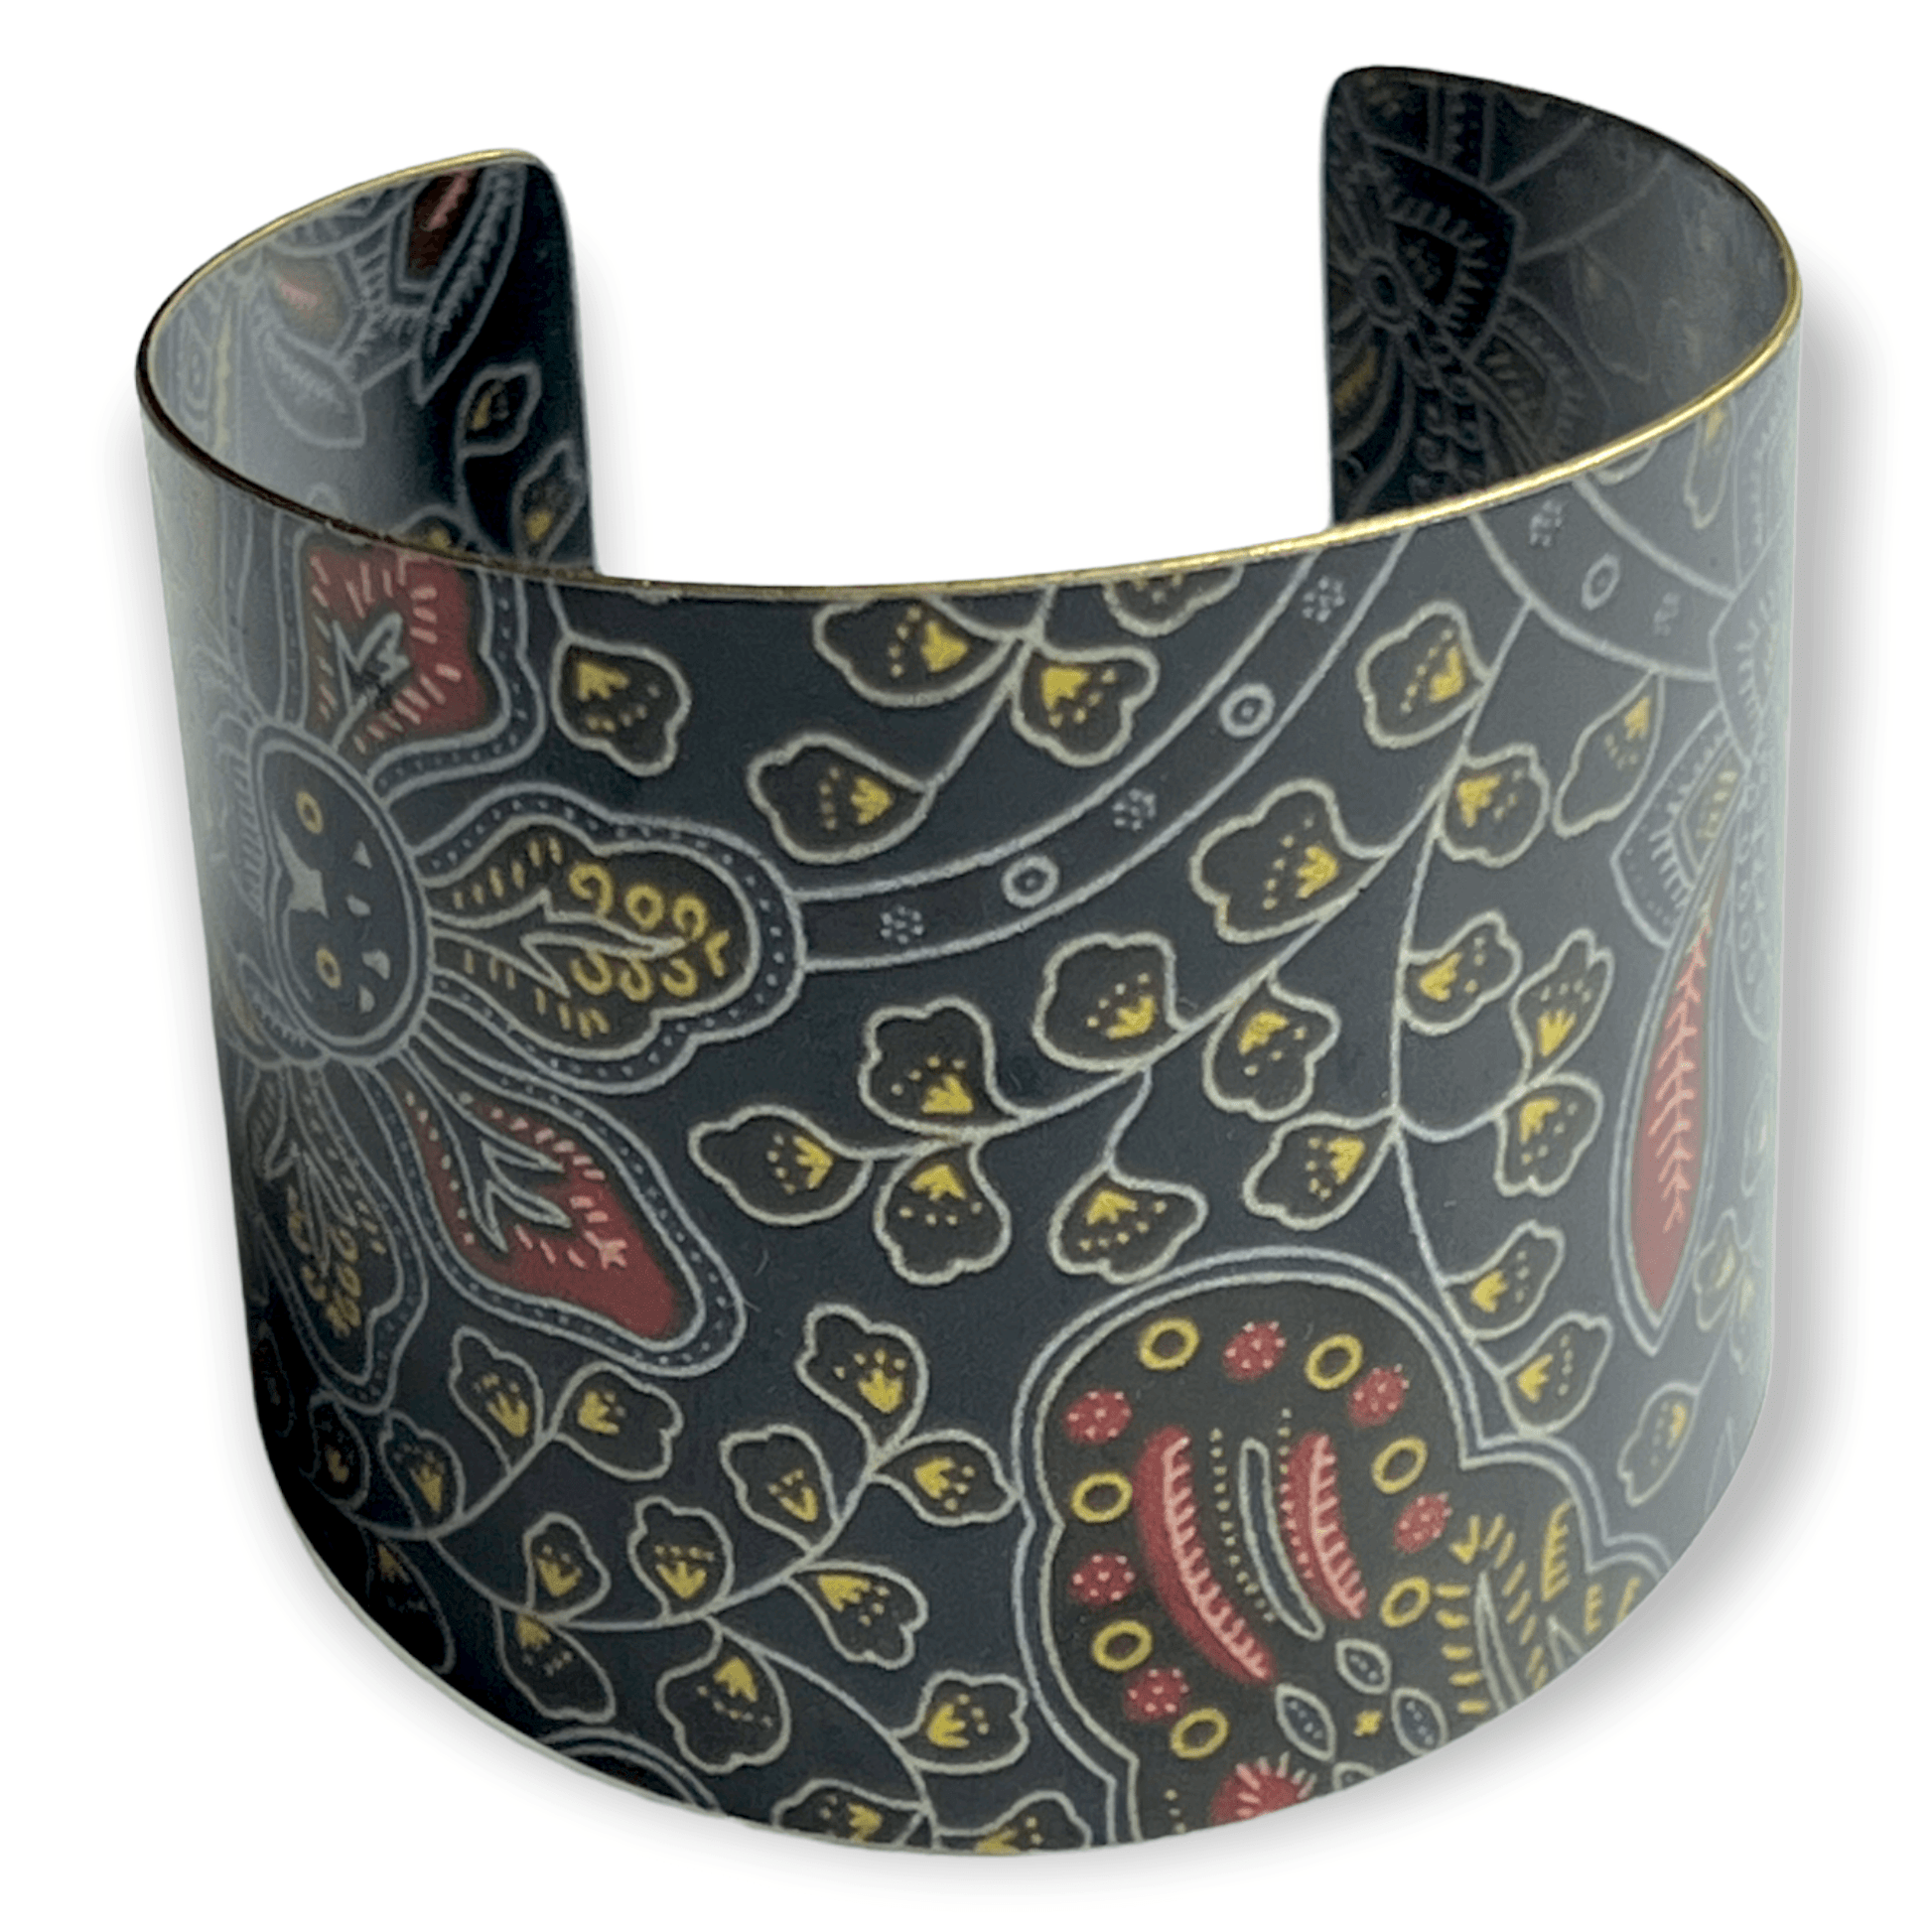 Travel inspired patterned brass cuff bracelet - Sundara Joon